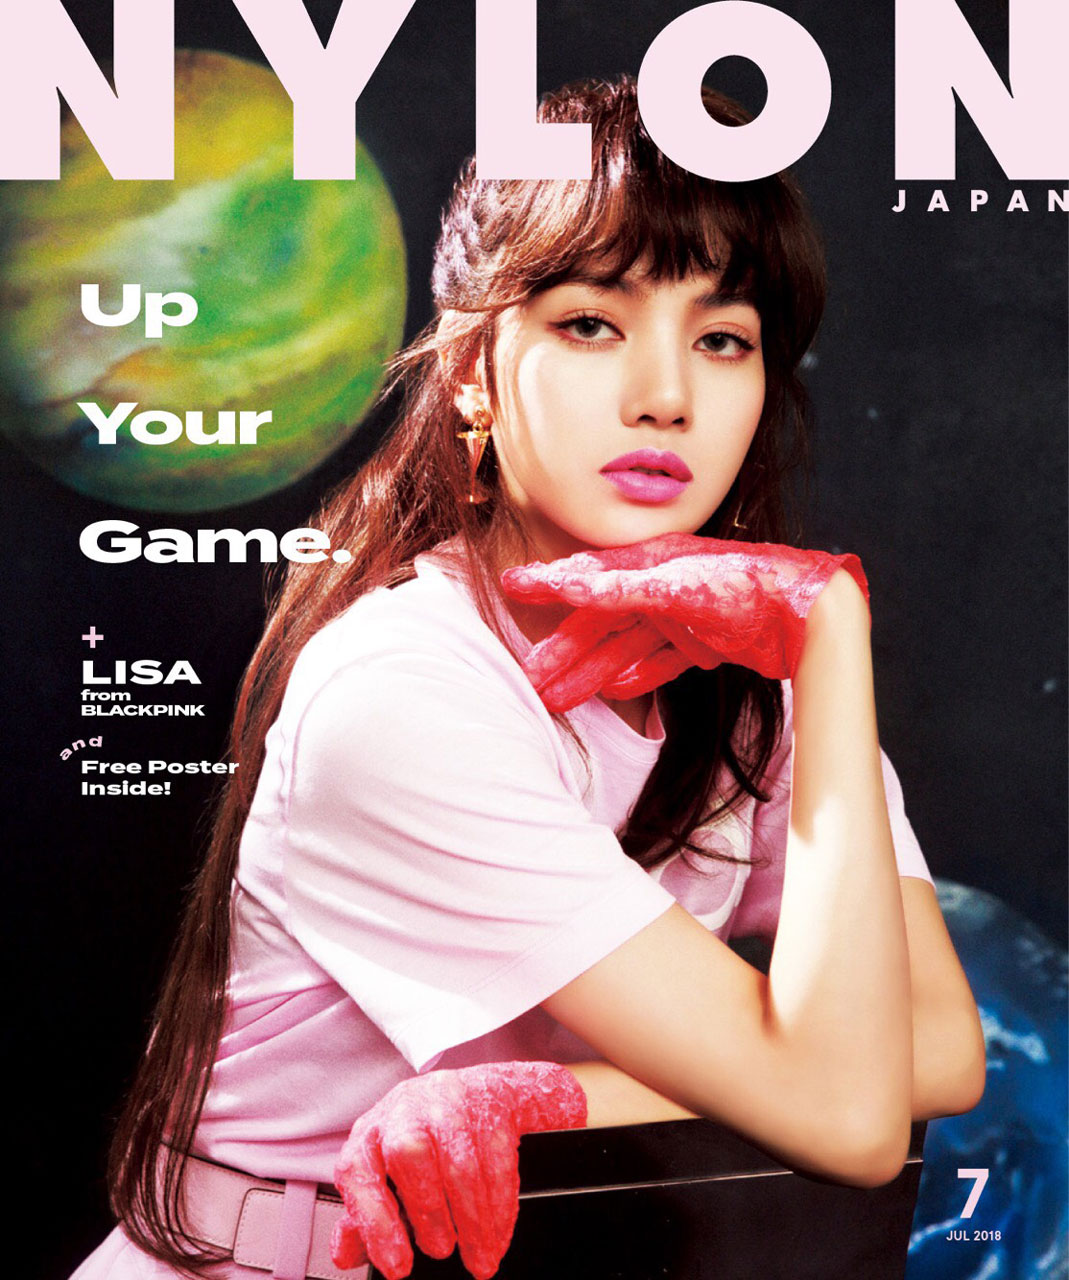 Lisa From Blackpink 5 28発売 Nylon Japan 7月号で初の単独表紙に登場 Musicman